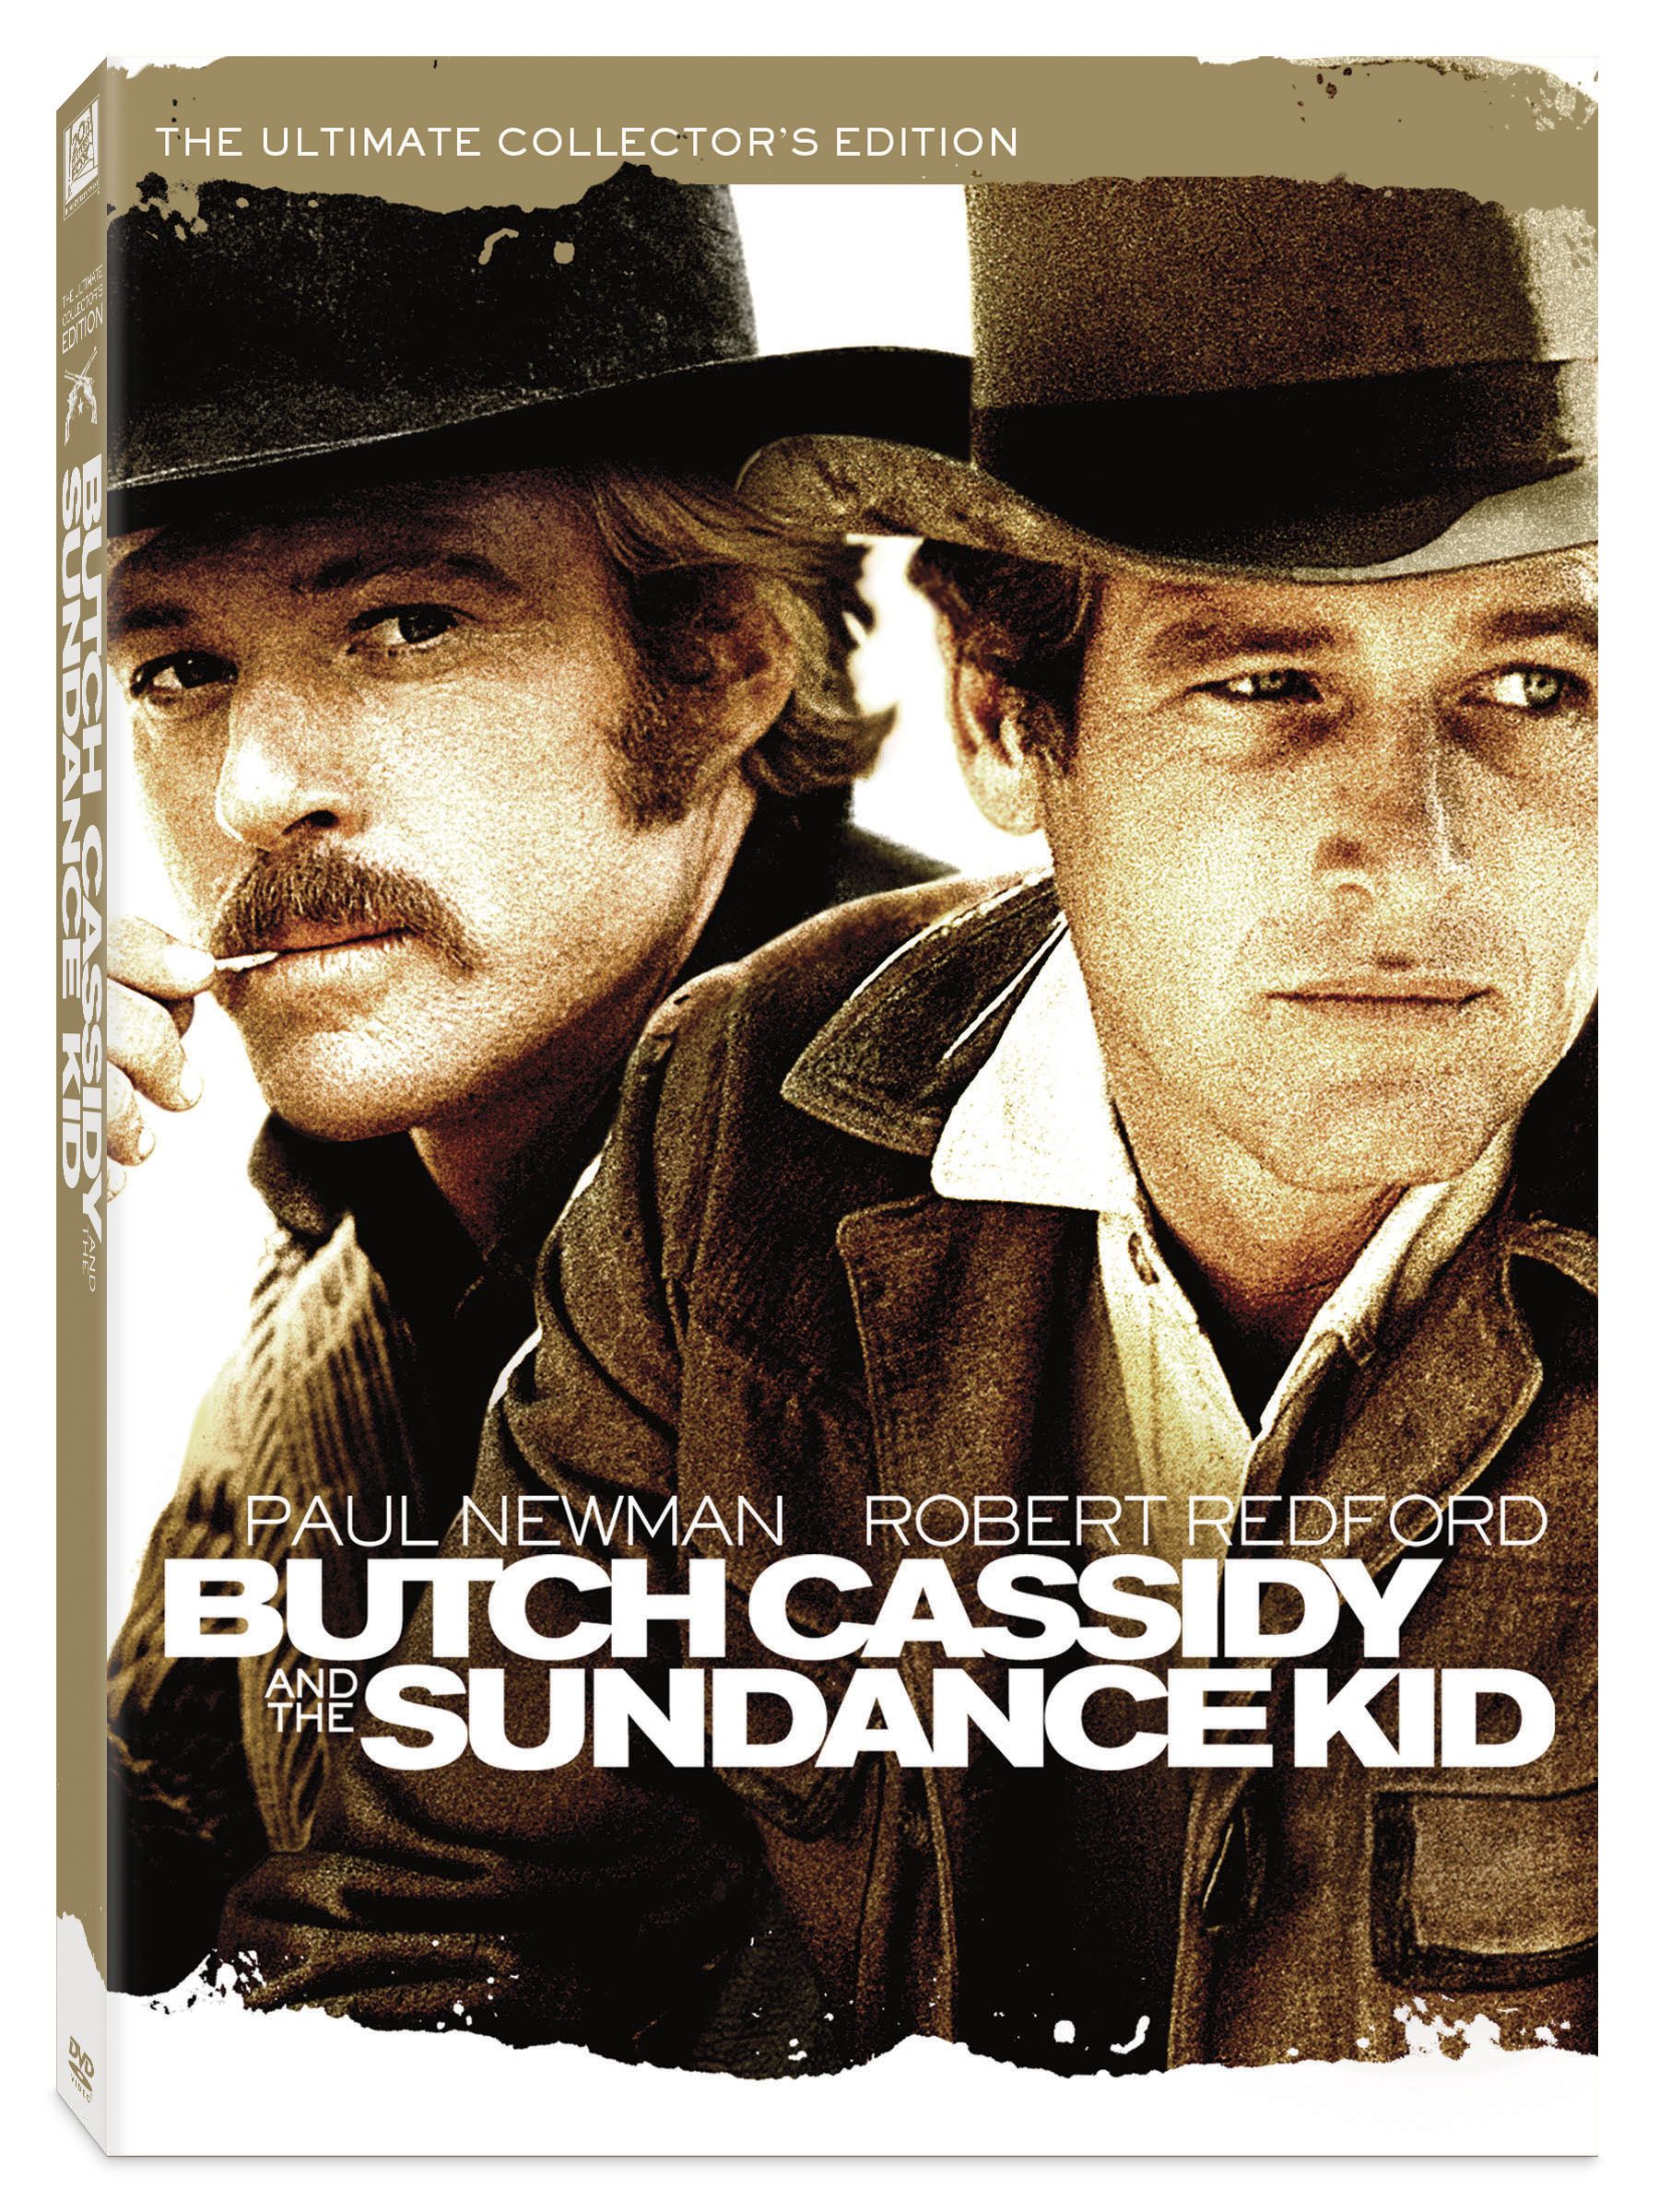 486x755px Butch Cassidy And The Sundance Kid 98.73 KB